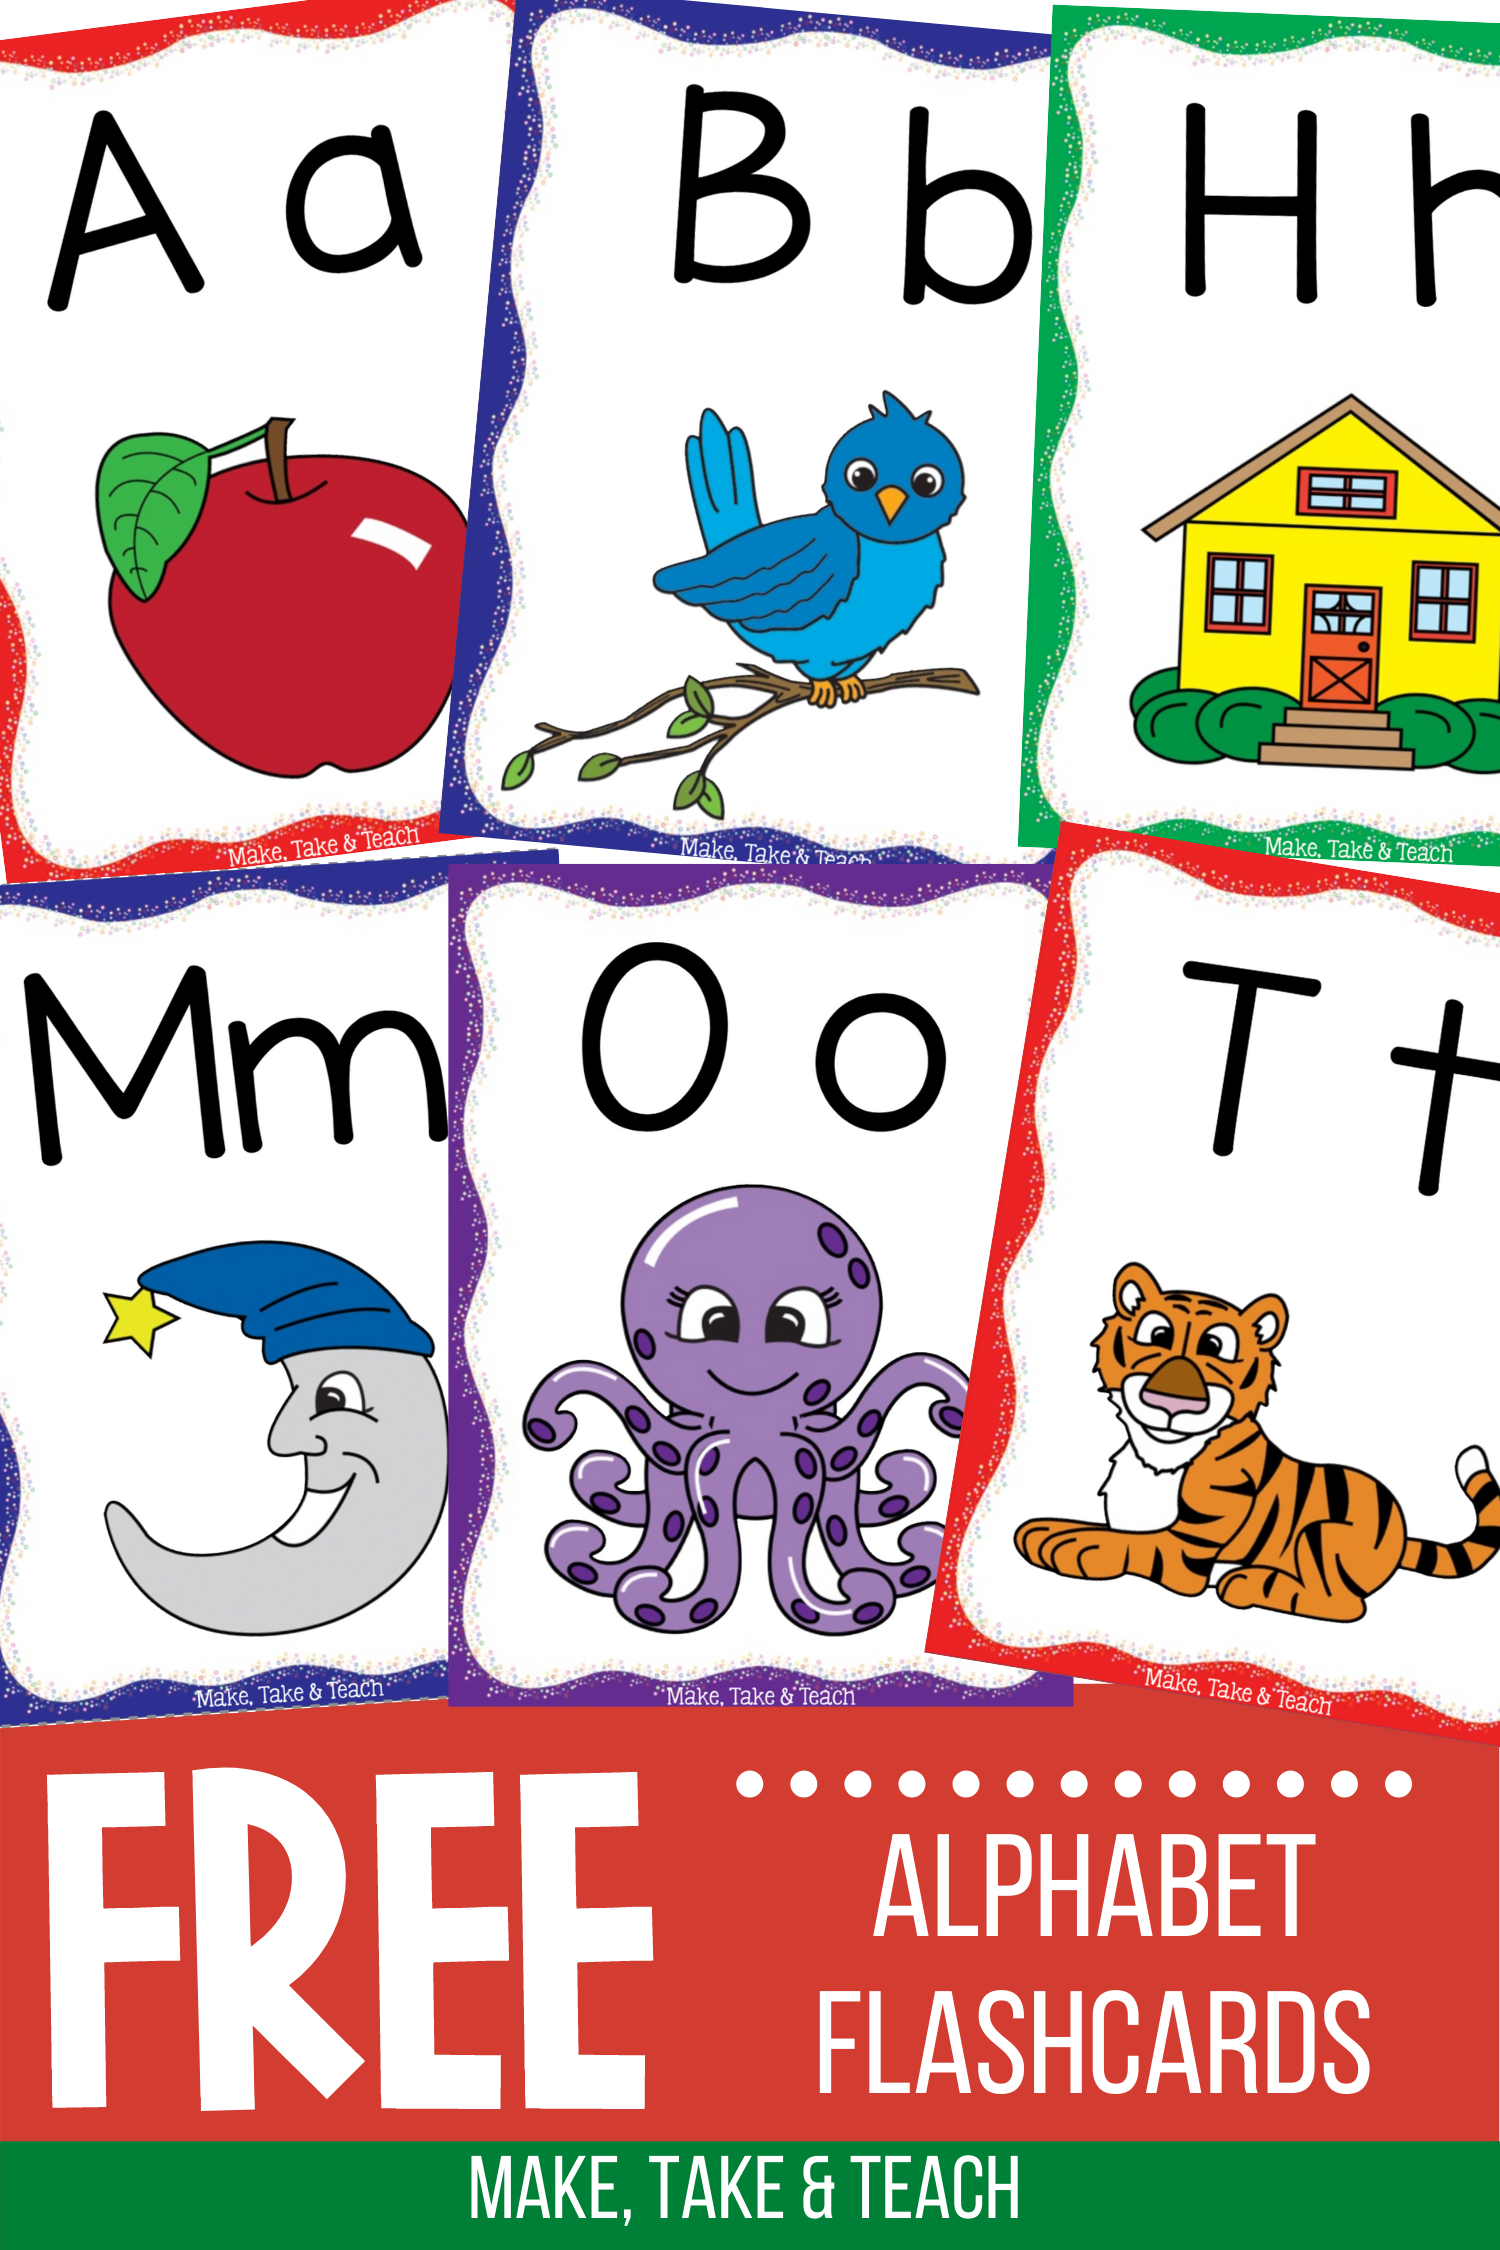 FREE Alphabet Flashcards with Keywords - Make Take & Teach